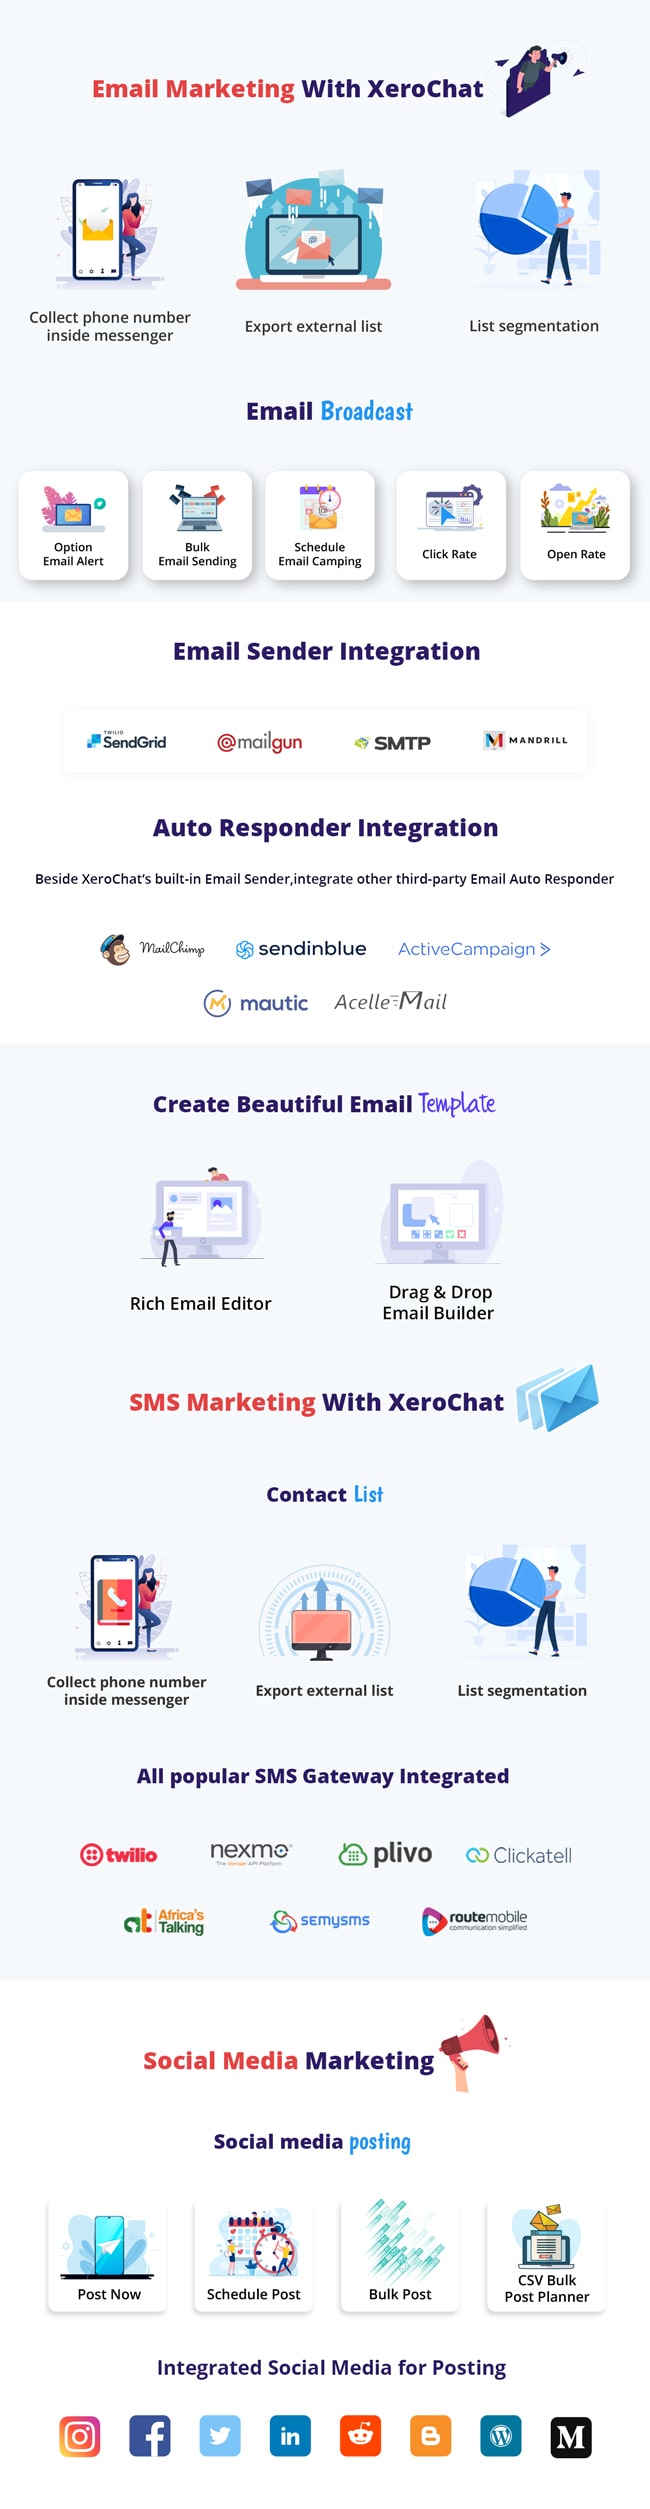 XeroChat - Facebook Chatbot, eCommerce & Social Media Management Tool (SaaS) - 25